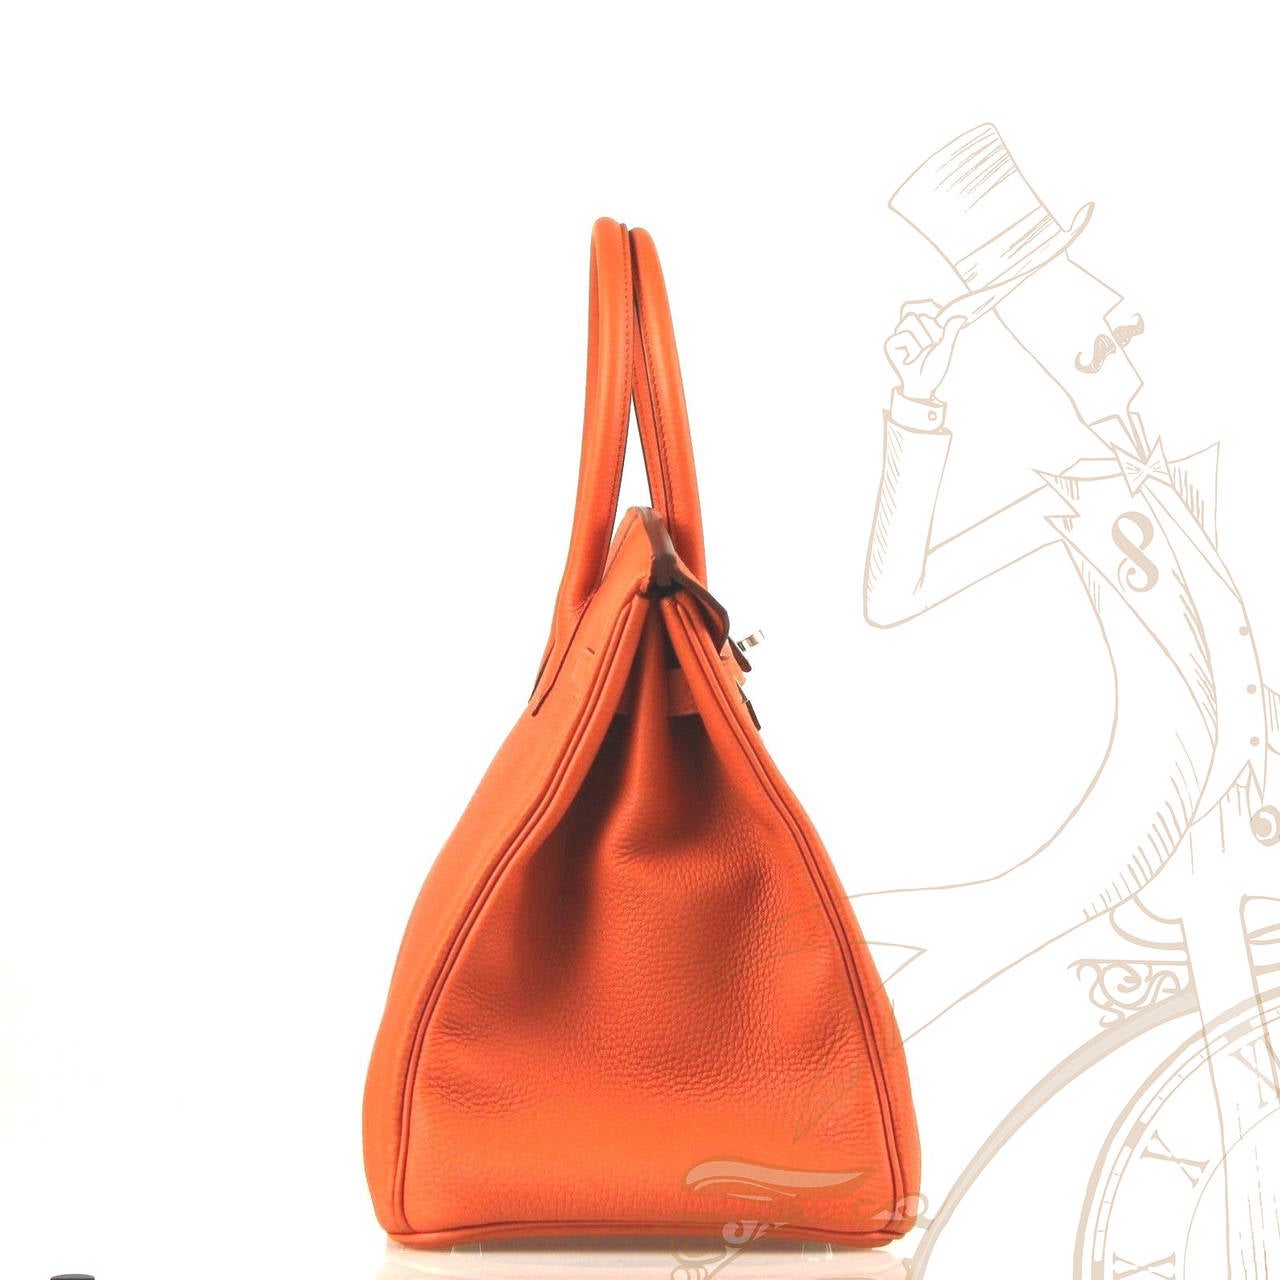 Hermes Togo Leather Silver Hdw 35 Cm Birkin Orange Tote Bag In Excellent Condition For Sale In Miami, FL